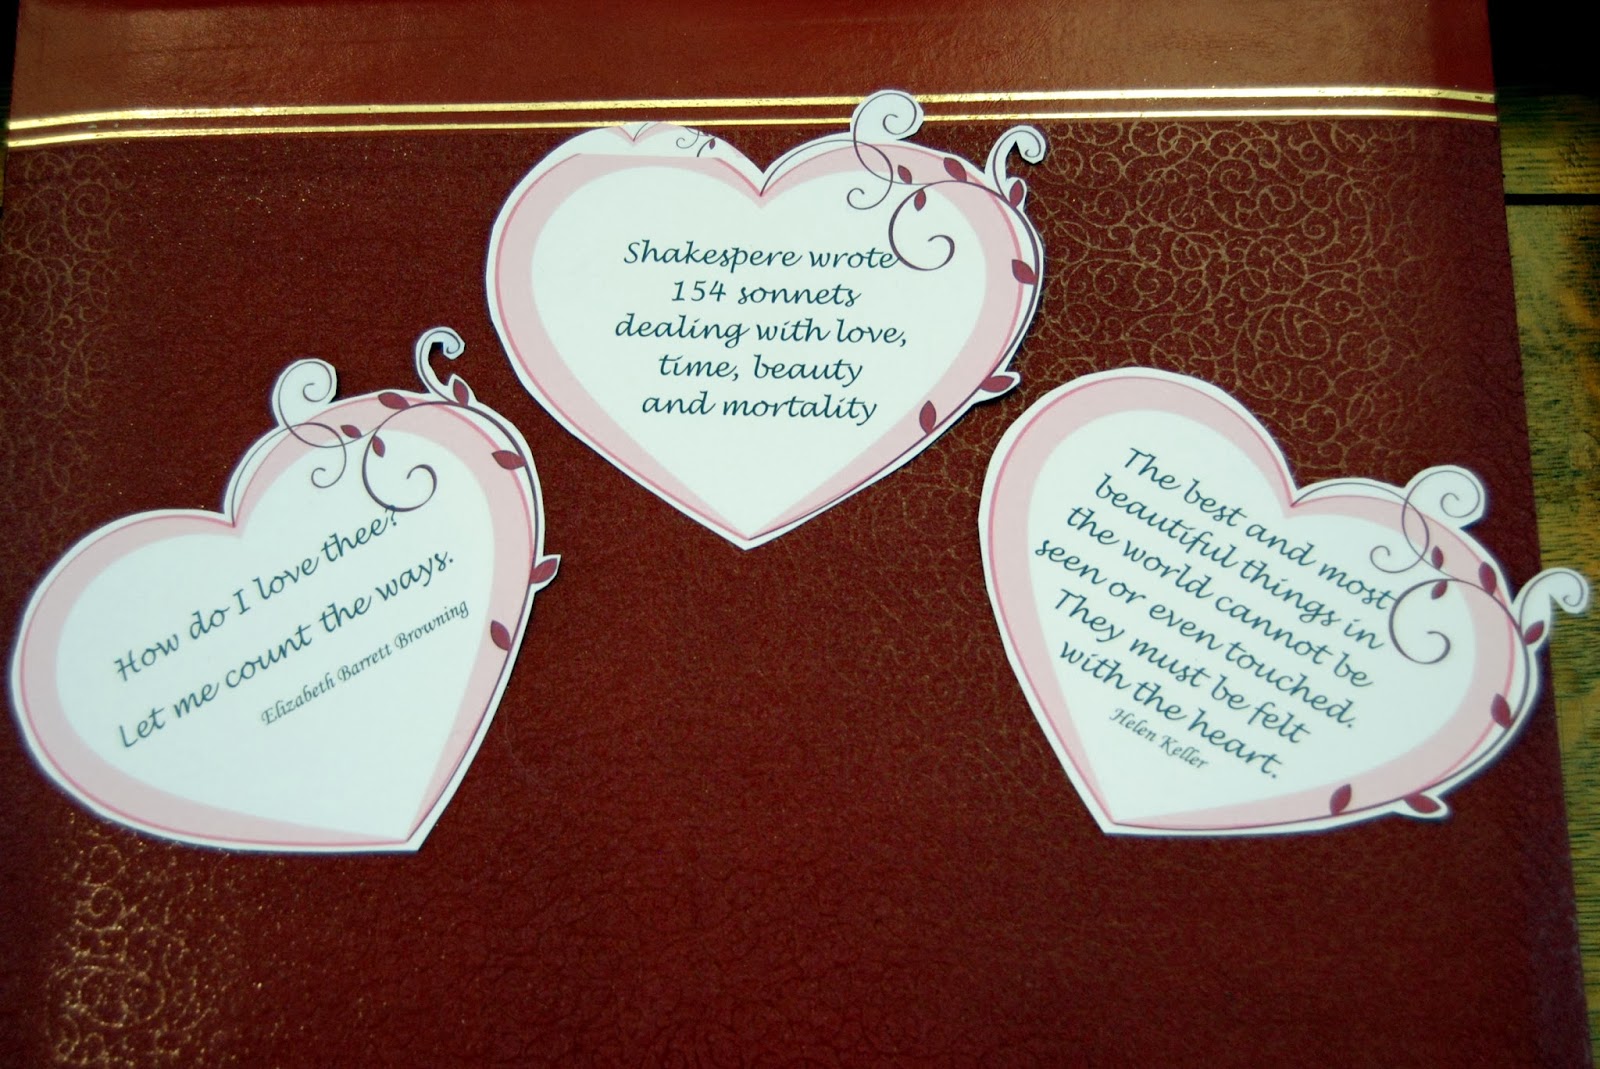 samples of Valentine sentiments